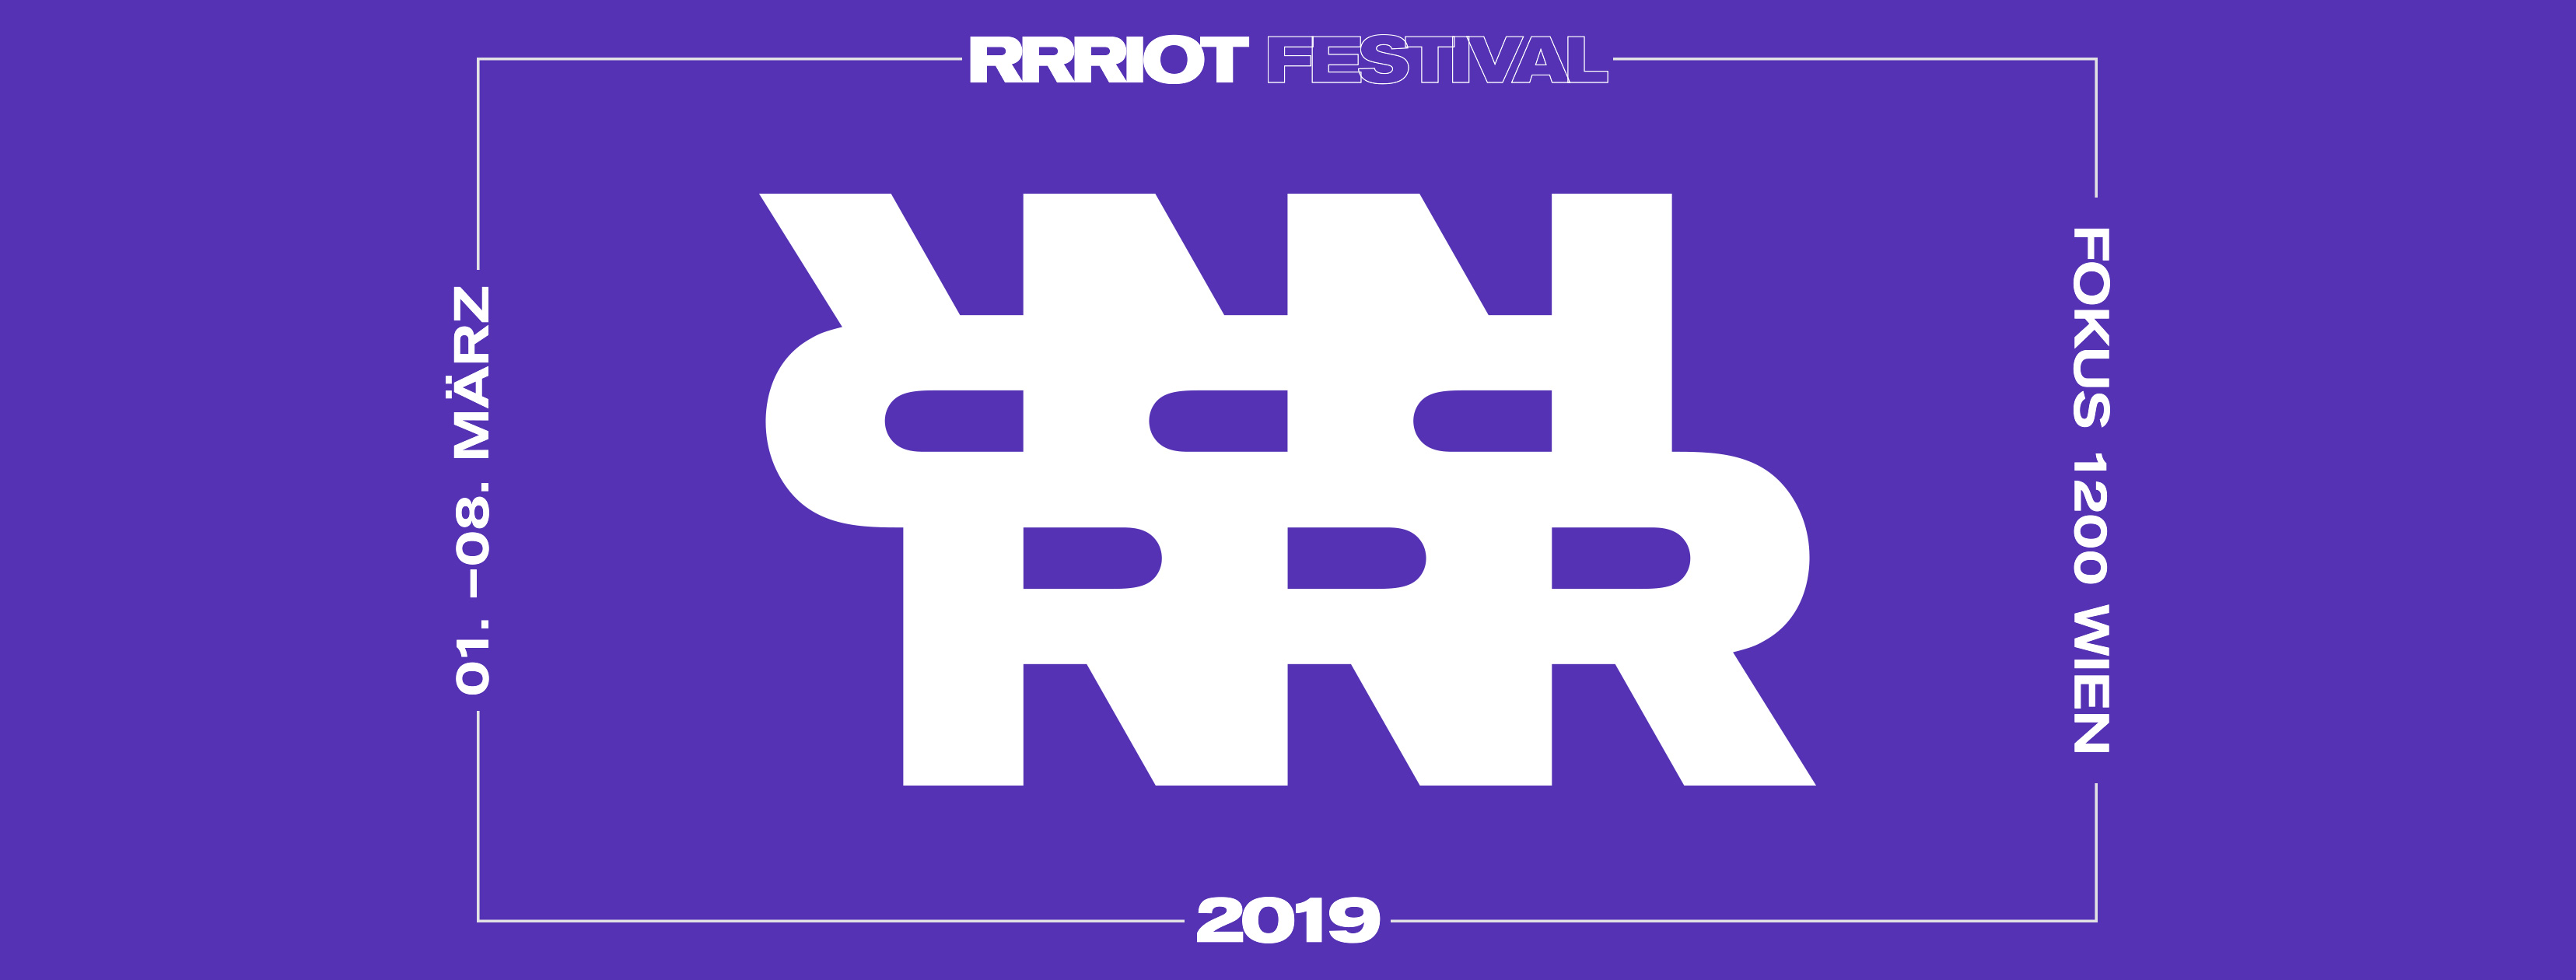 Rrriot Festival 2019